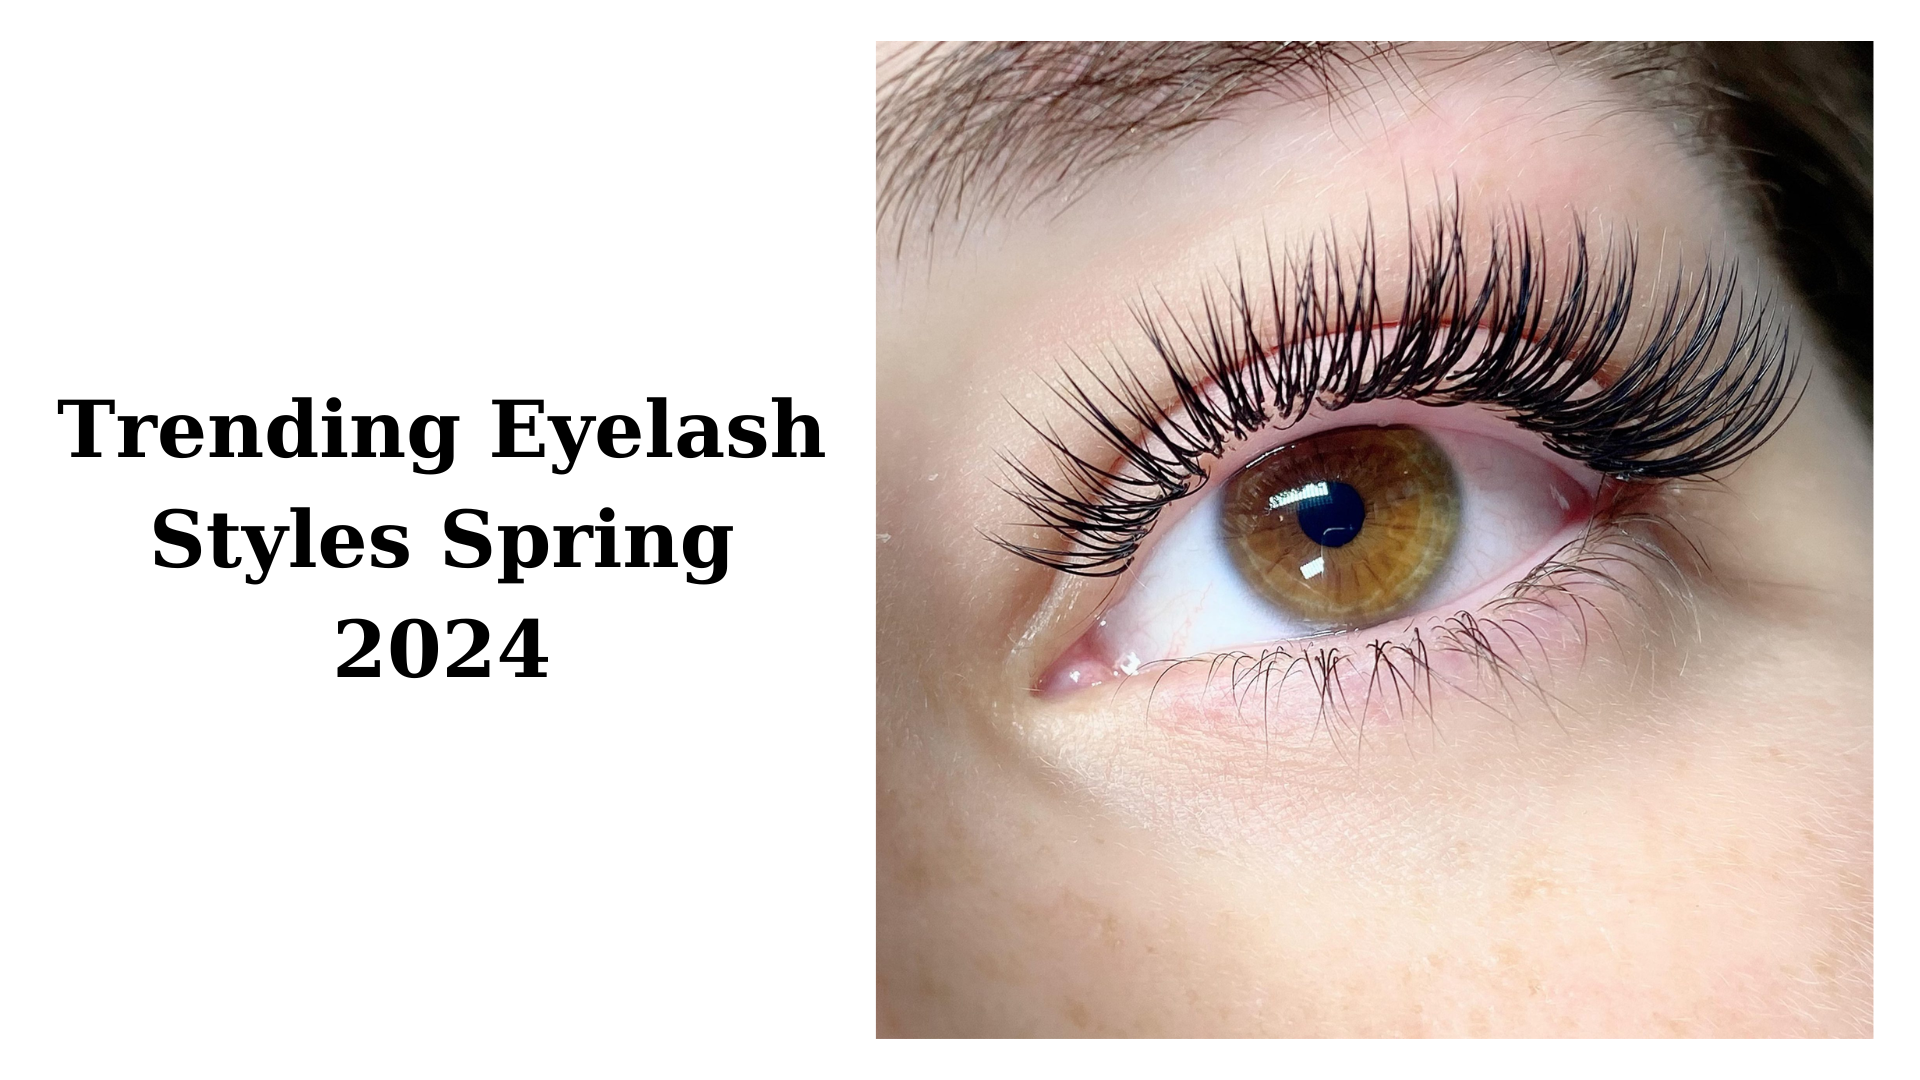 Trending Eyelash Styles Spring 2024